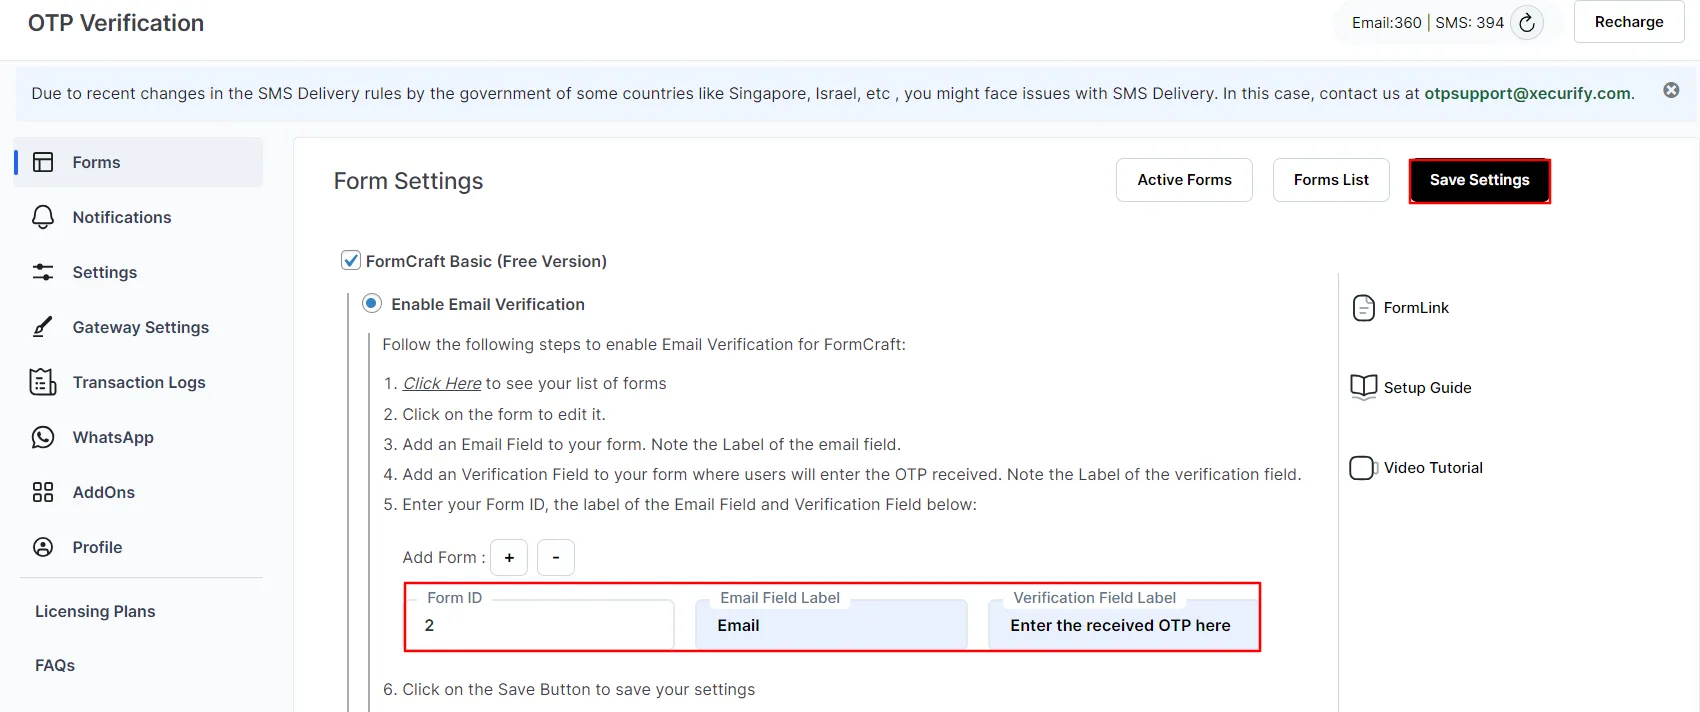 Free otp verification formcraft basic - Enter email field label